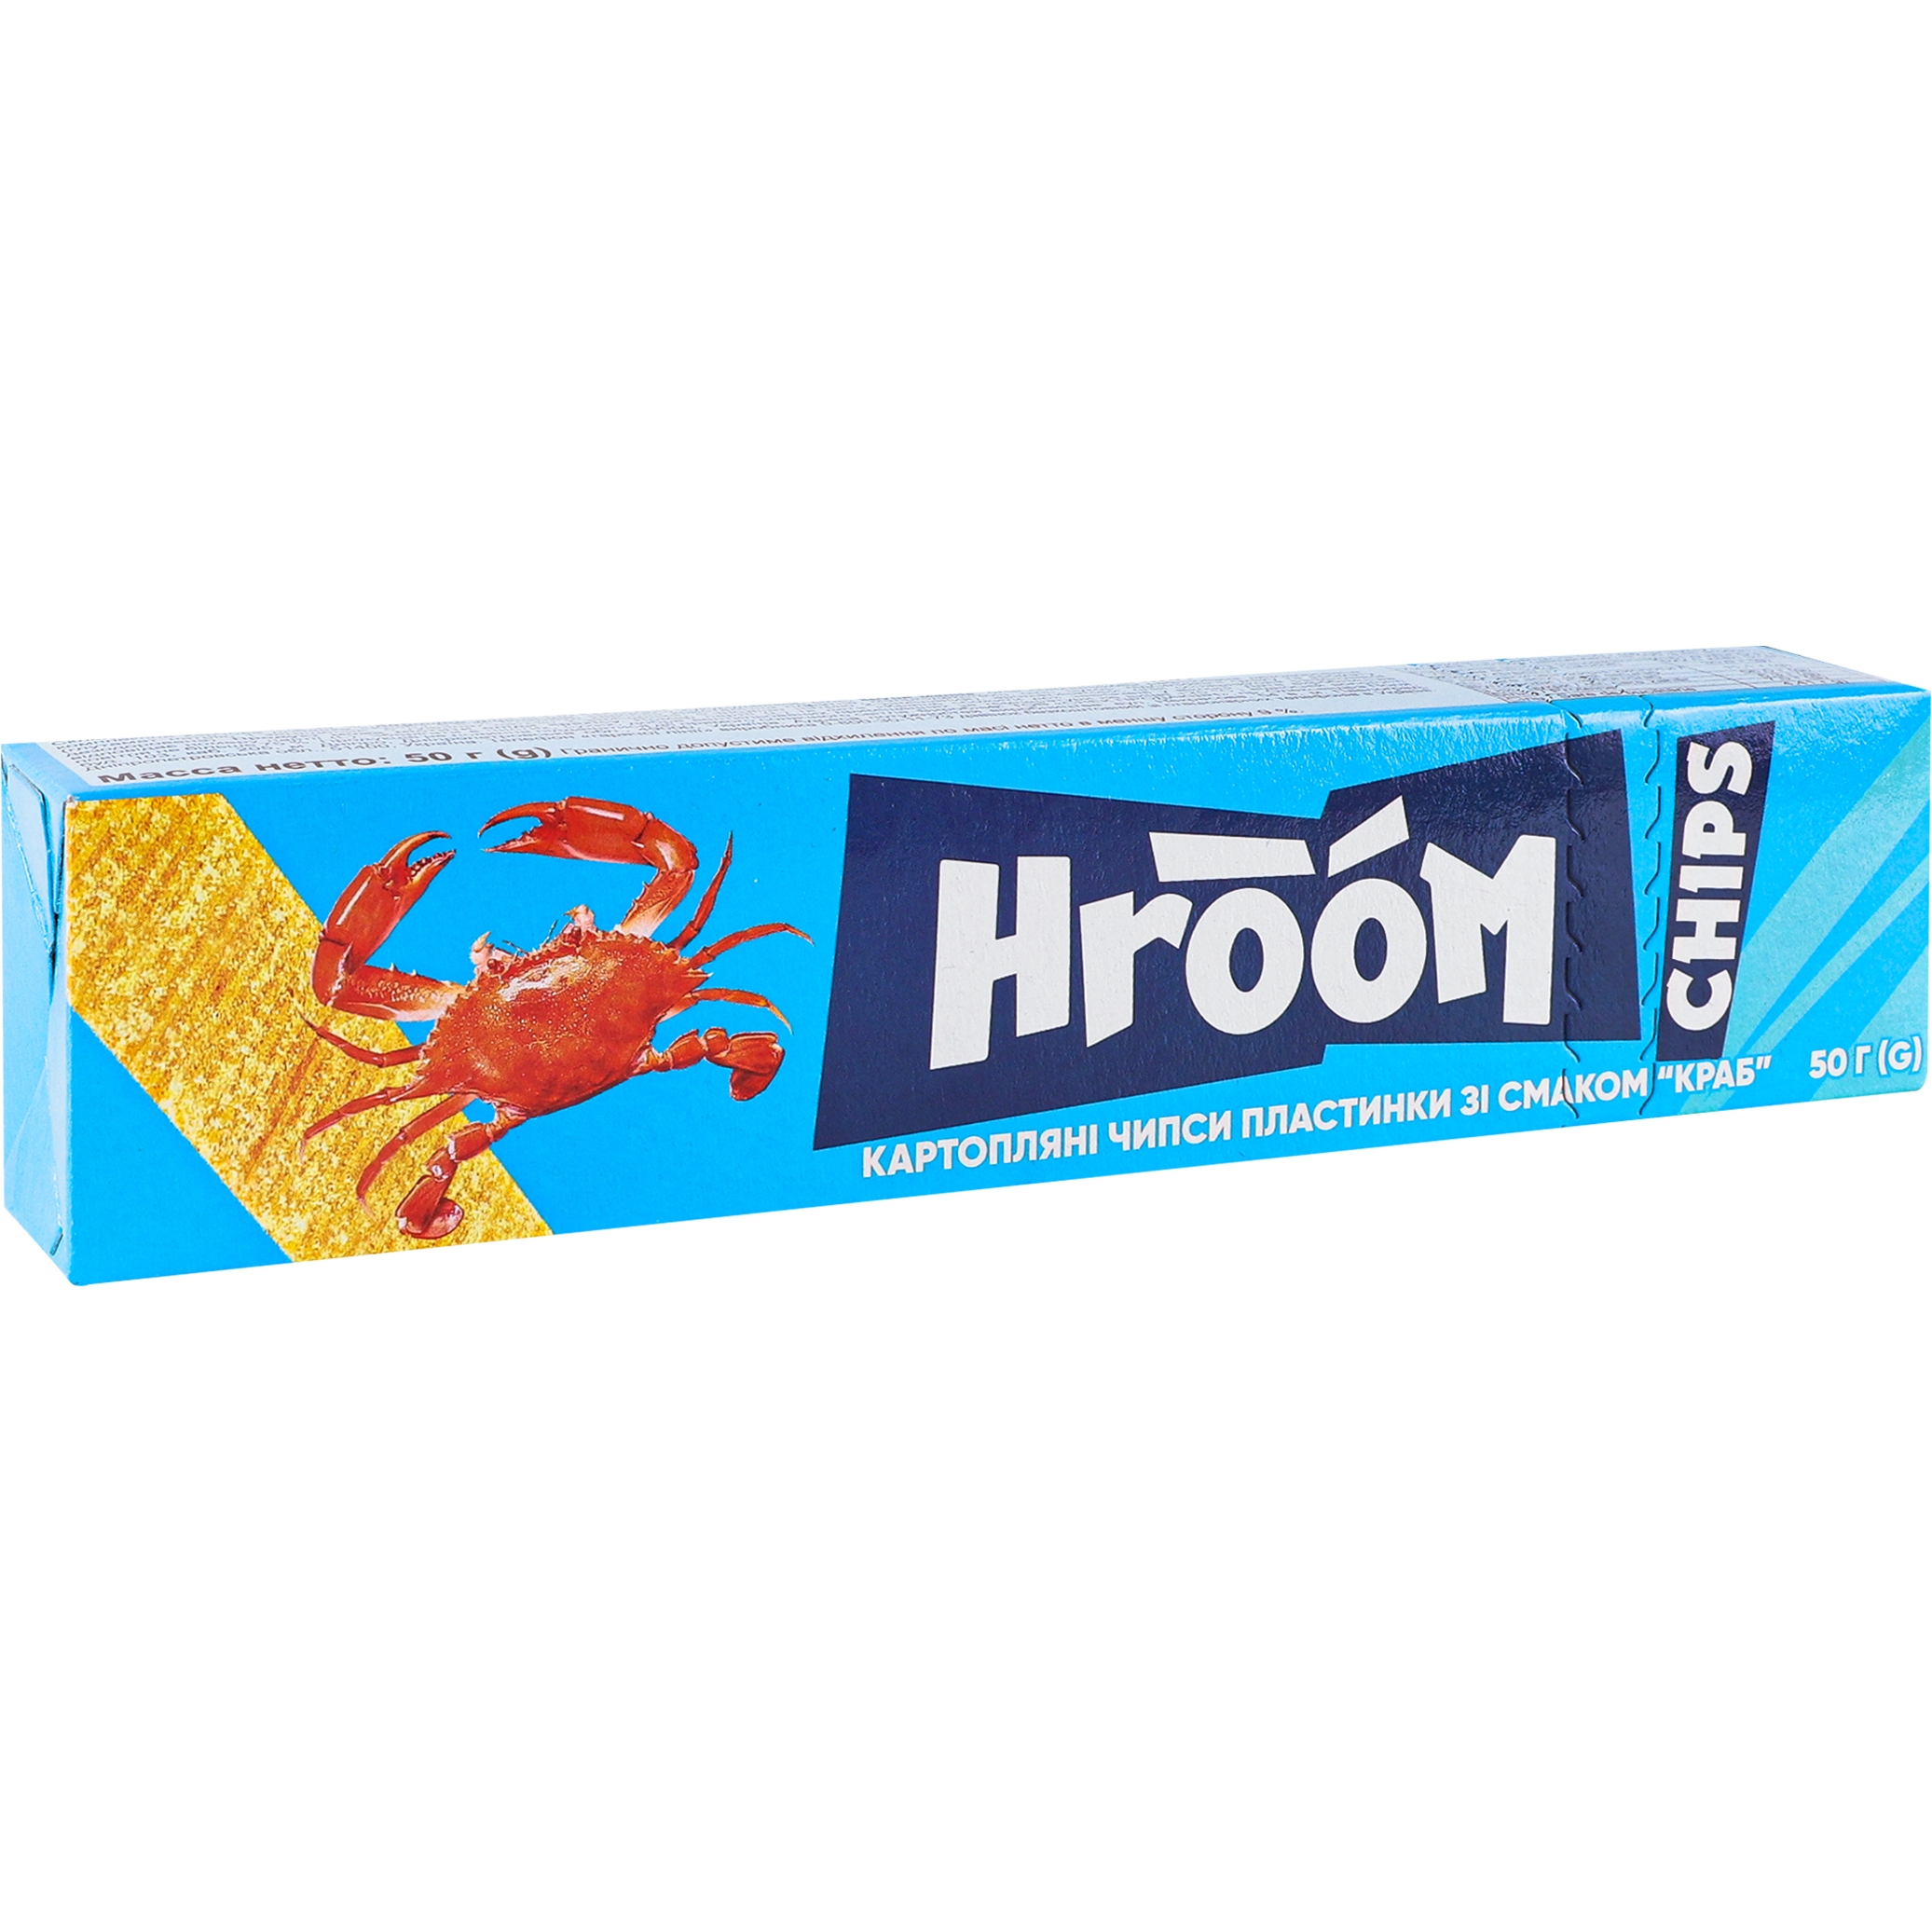 Картопляні чипси пластинки Hroom! Краб 50 г - фото 2